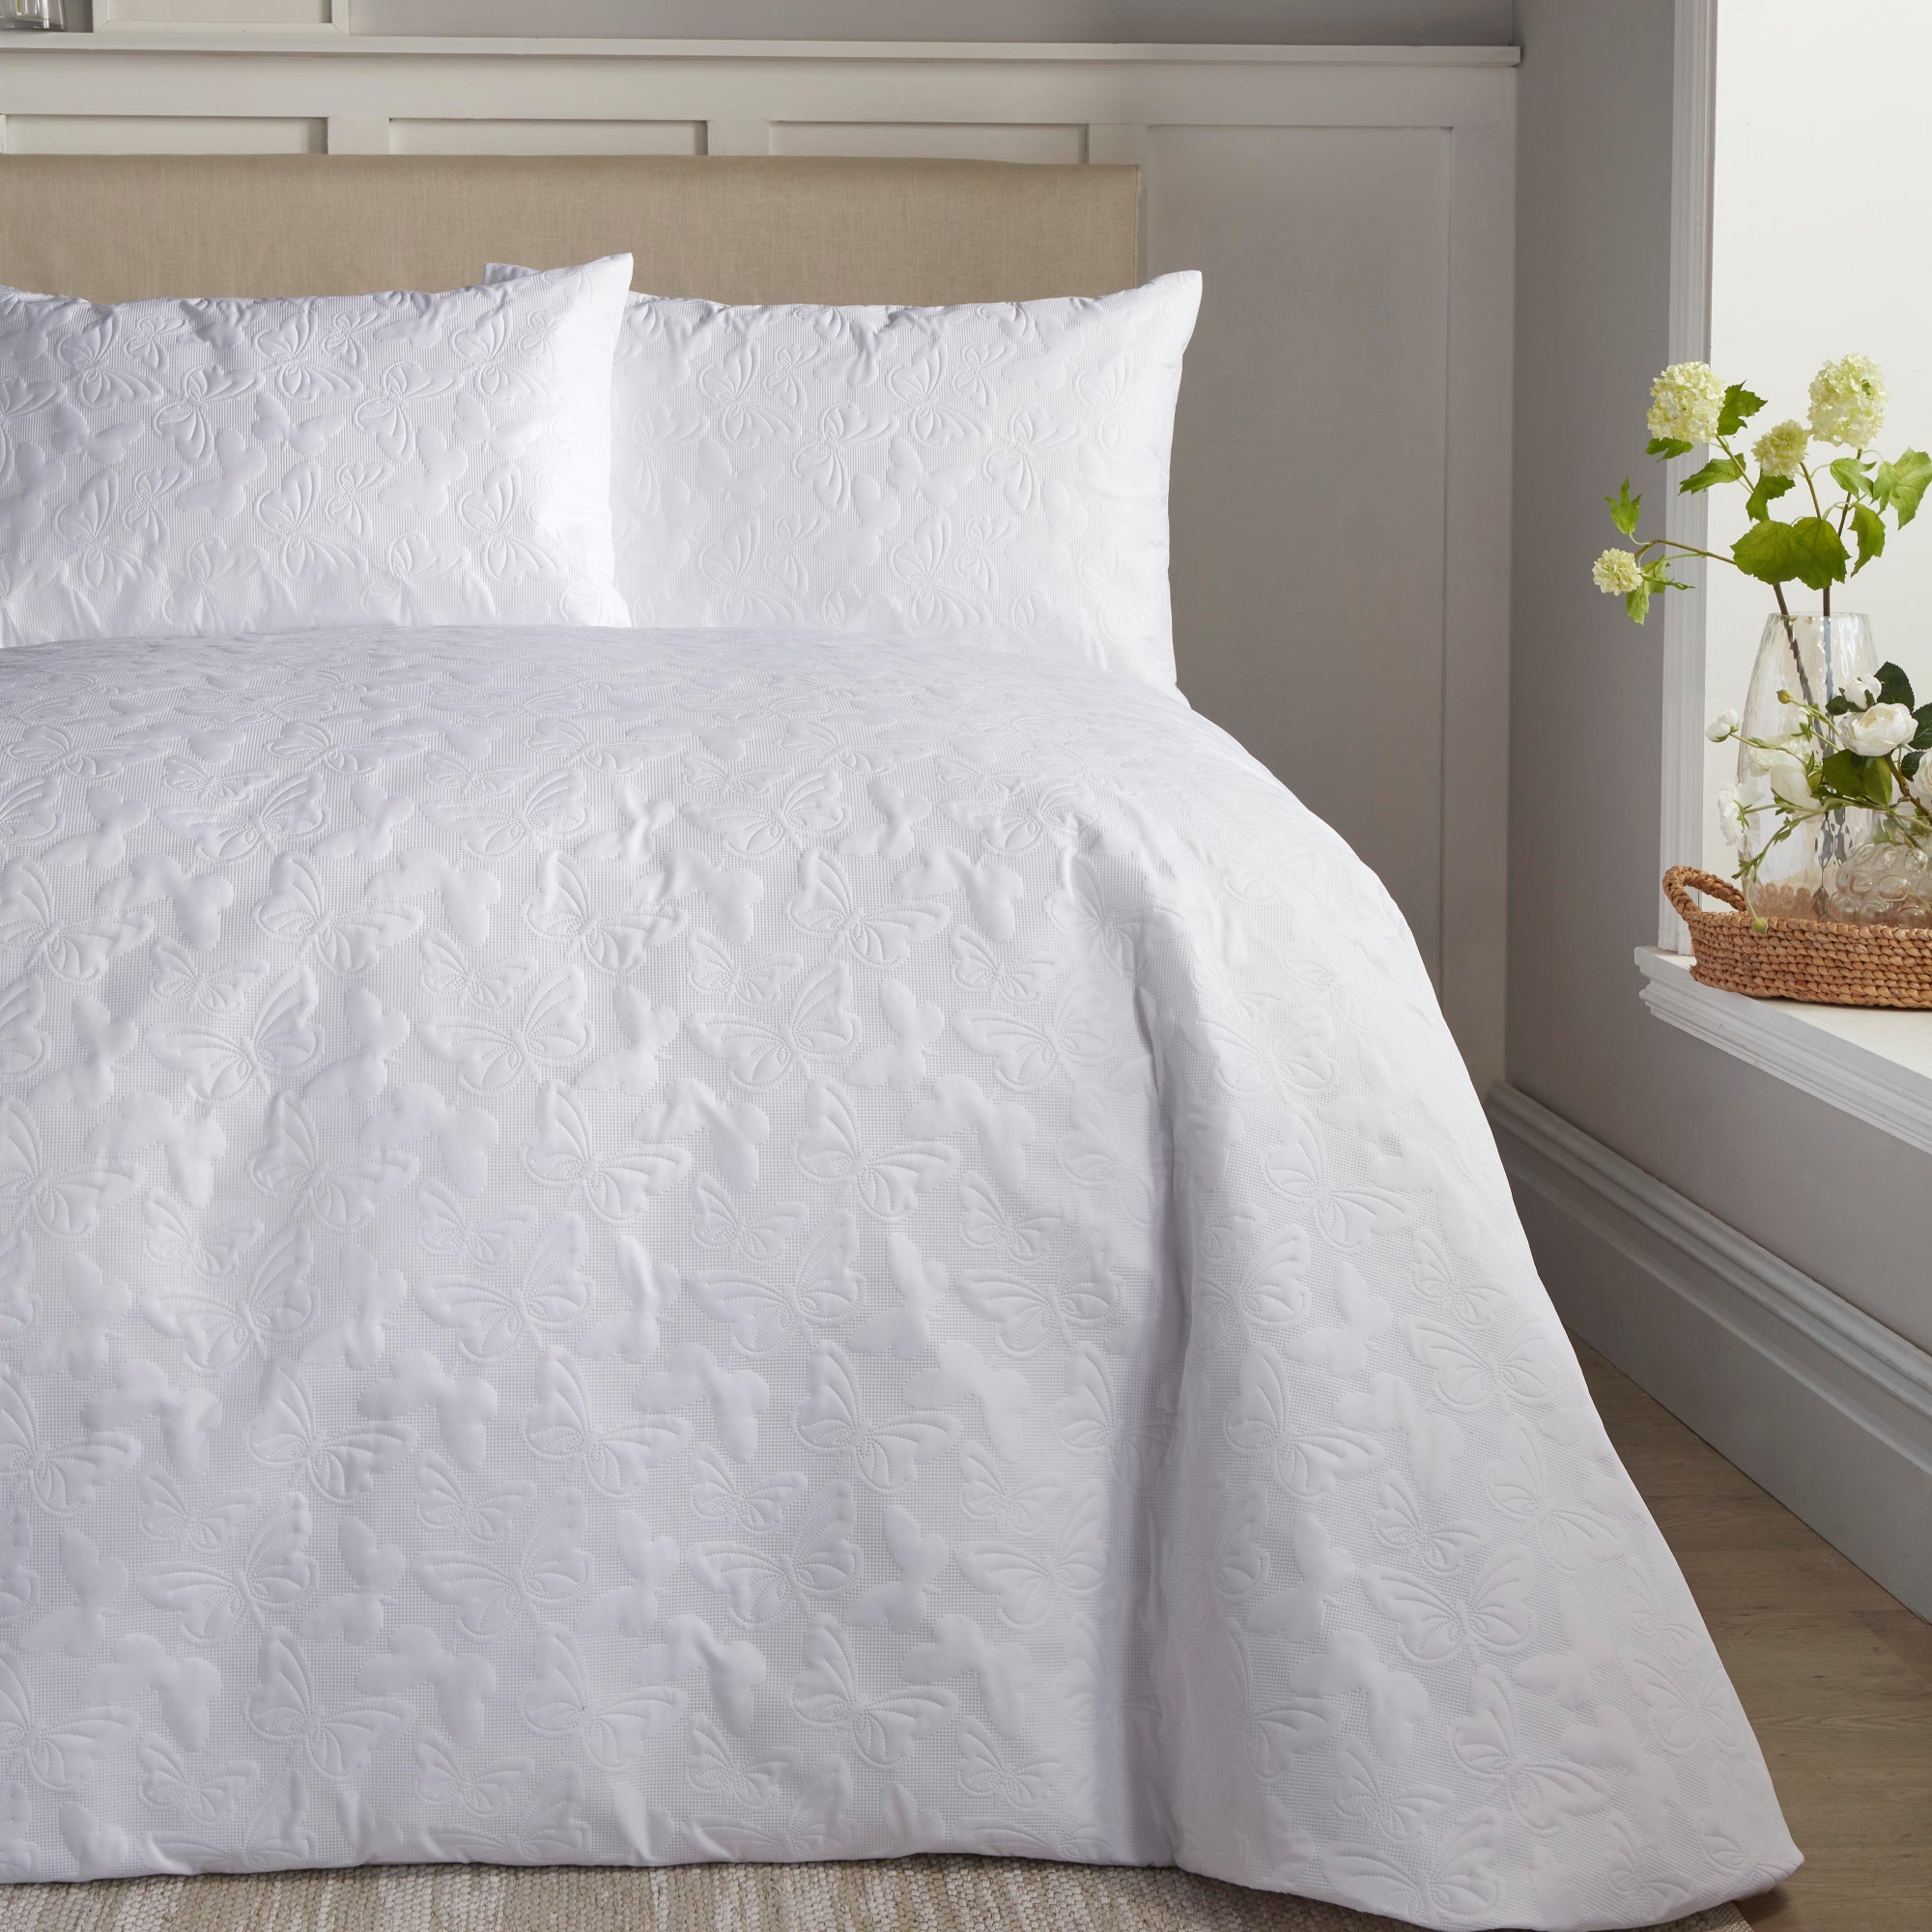 Photos - Bed Linen Butterfly Garden White Duvet Cover and Pillowcase Set White 